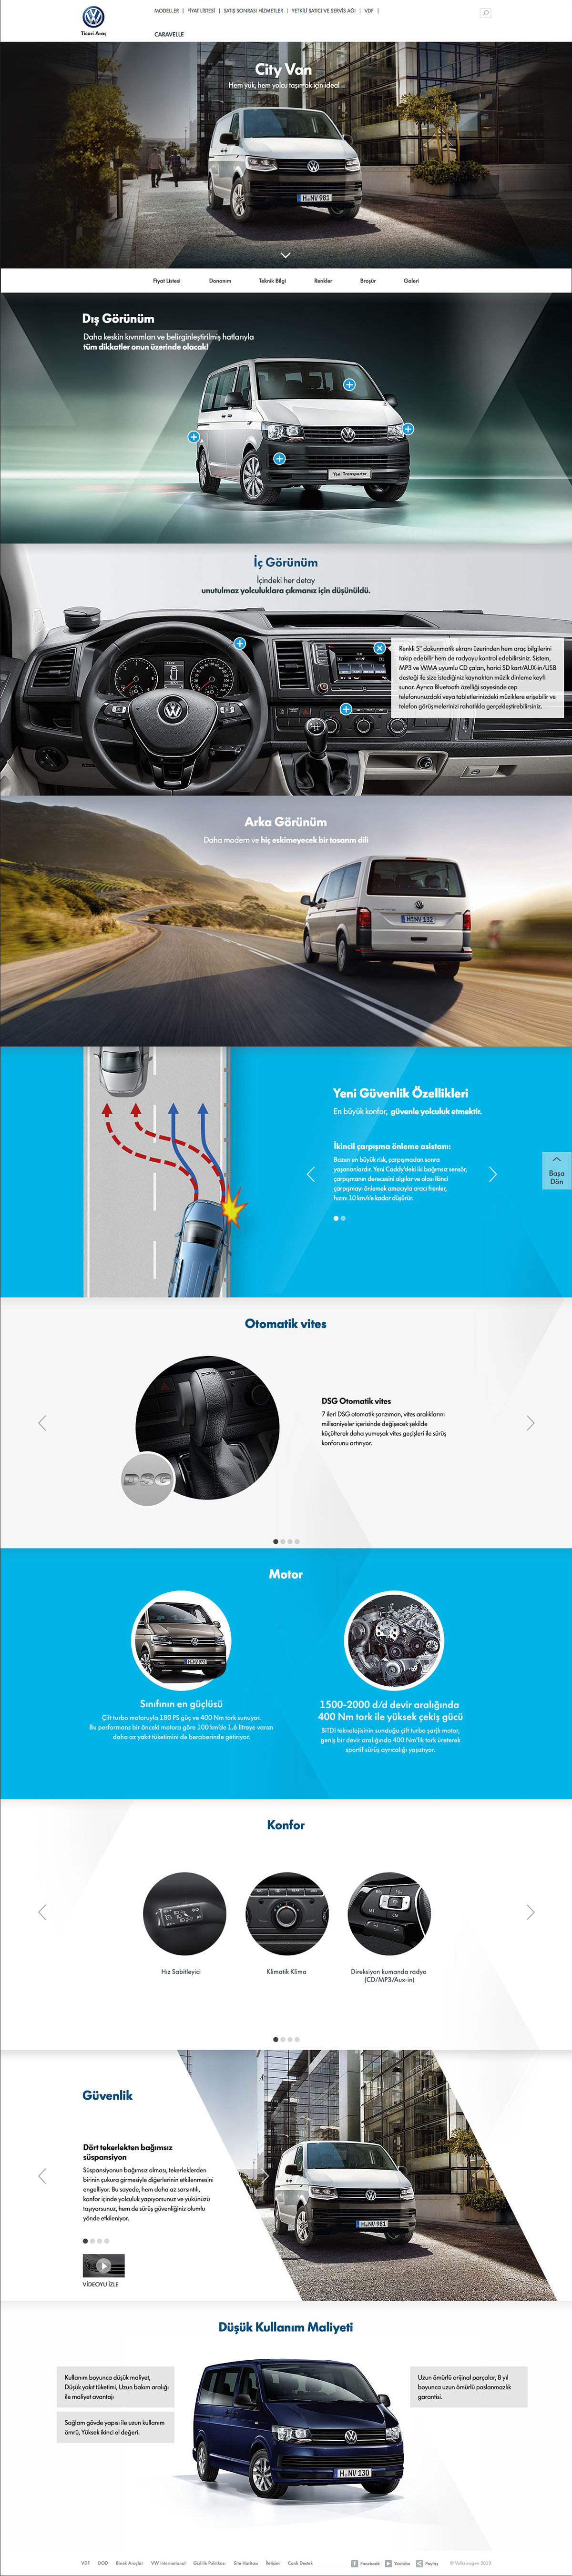 volkswagen web site design one page design art graphic